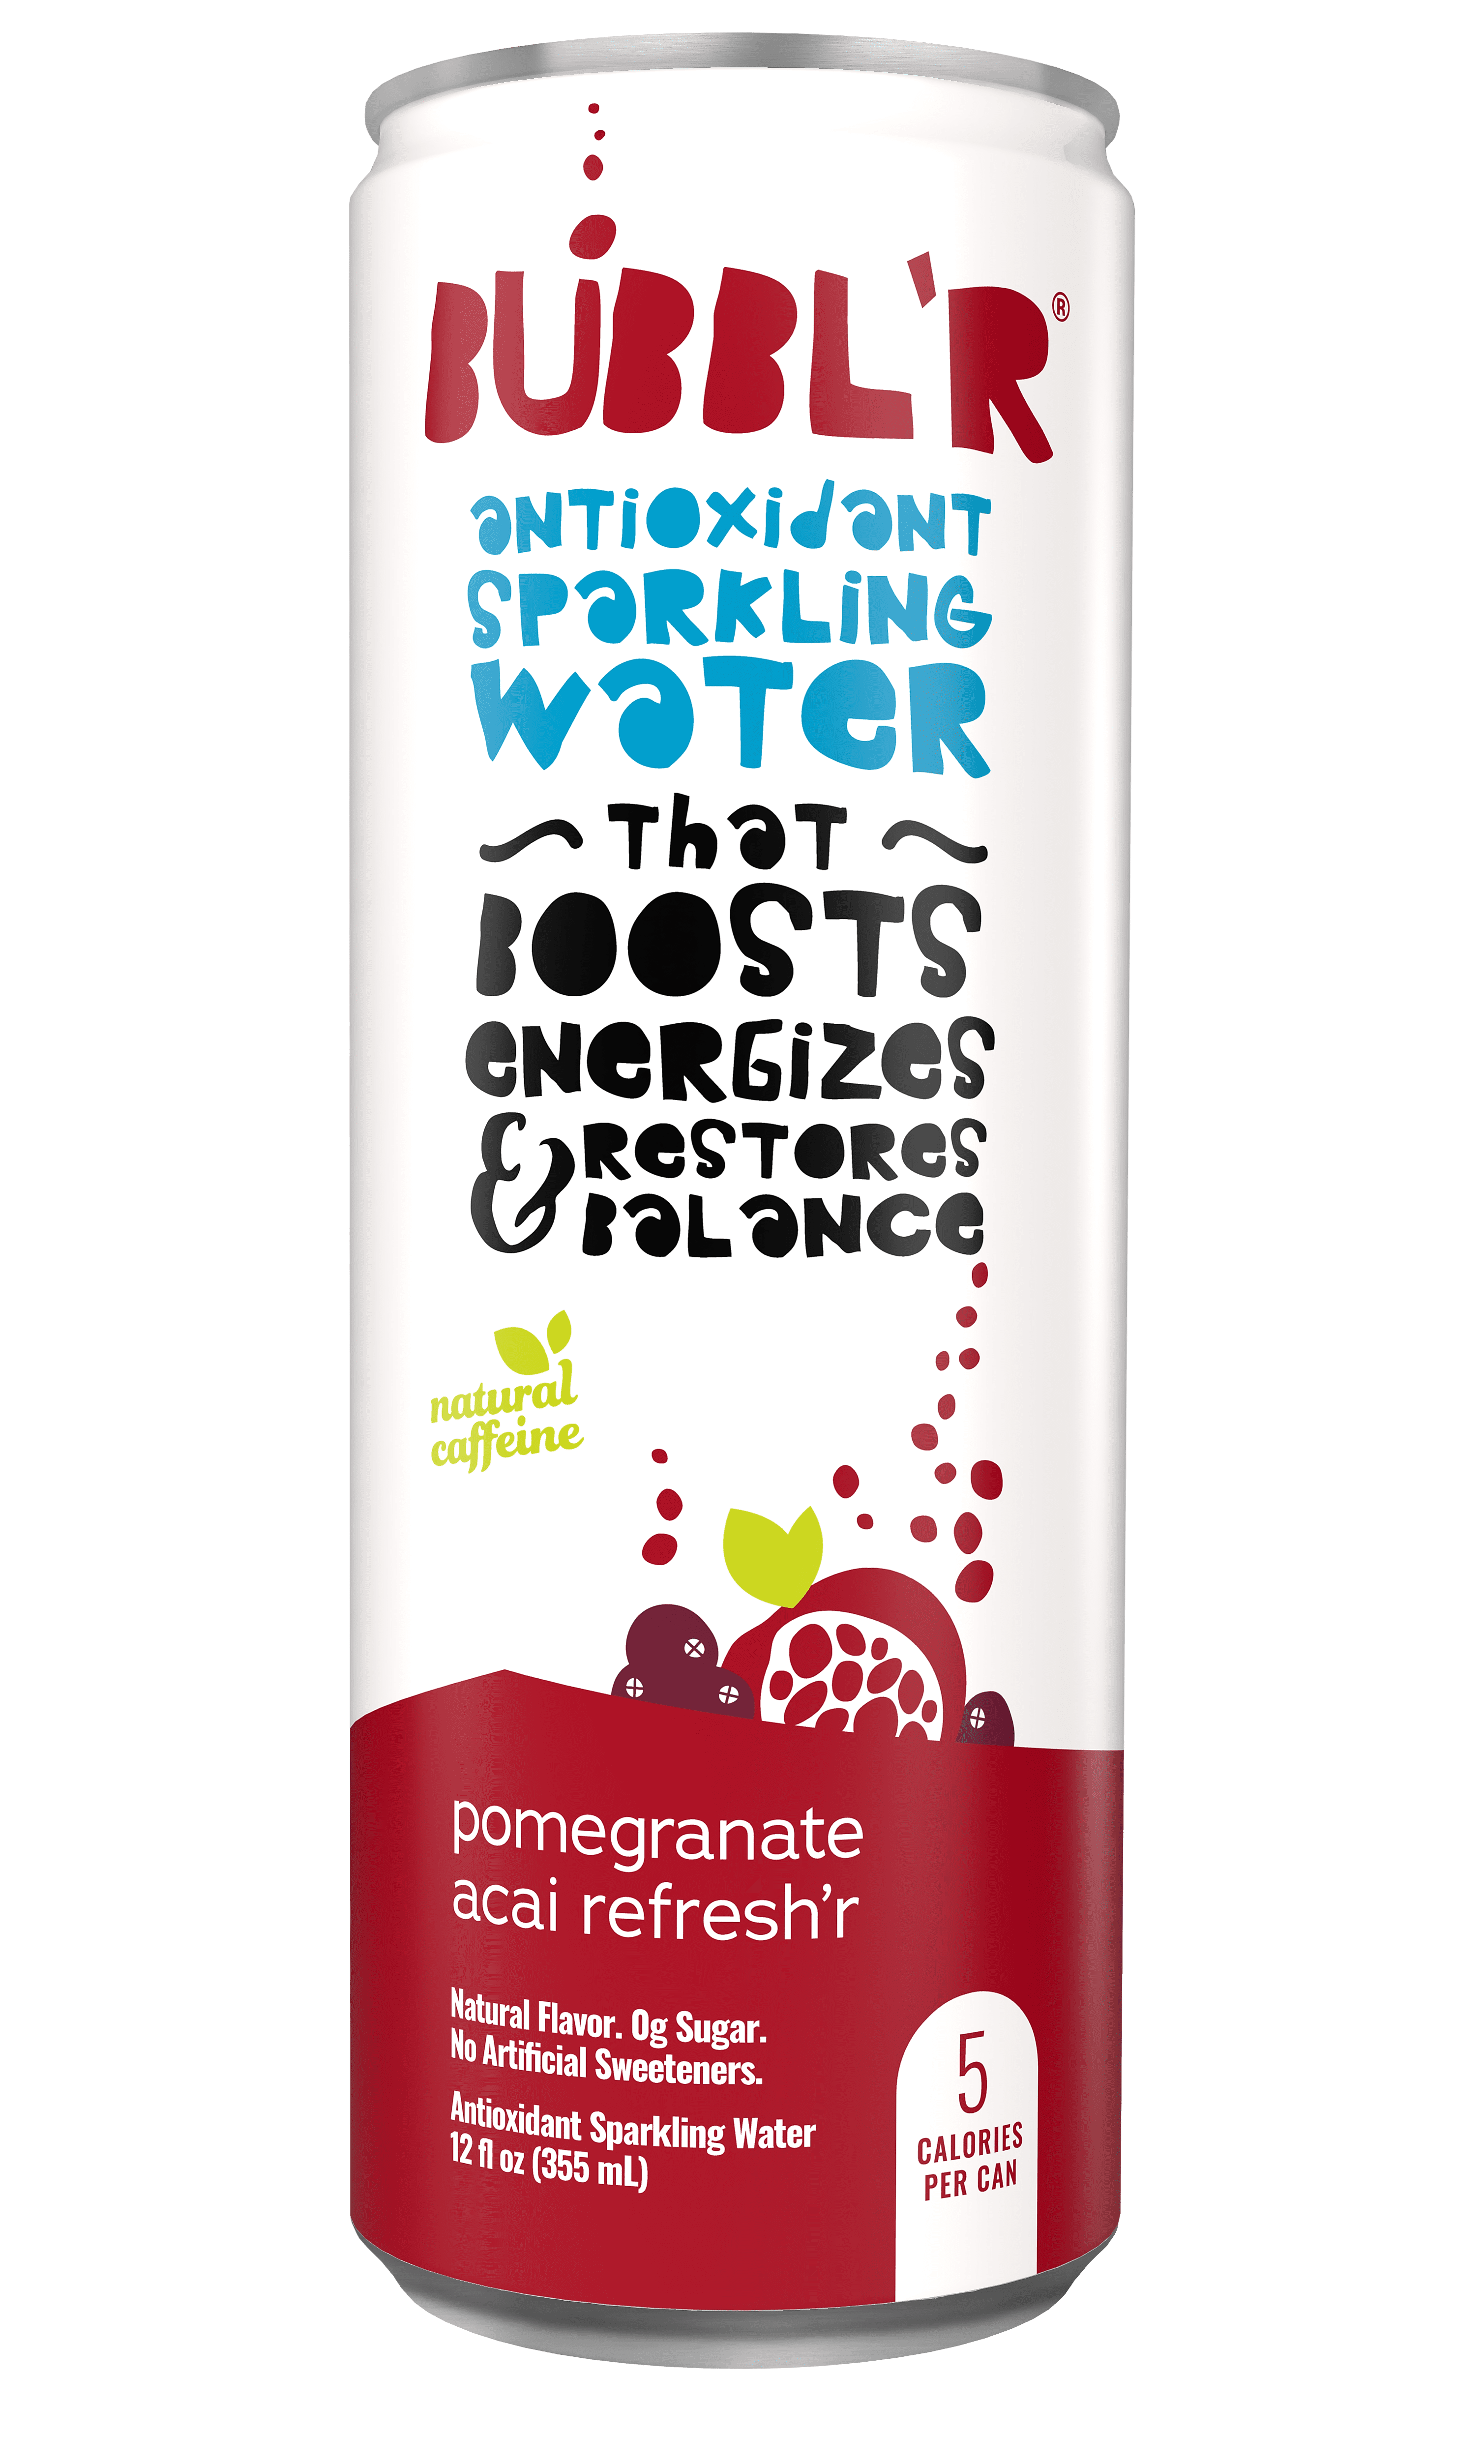 bubbl-r-antioxidant-sparkling-water-pomegranate-wic39920-walmart